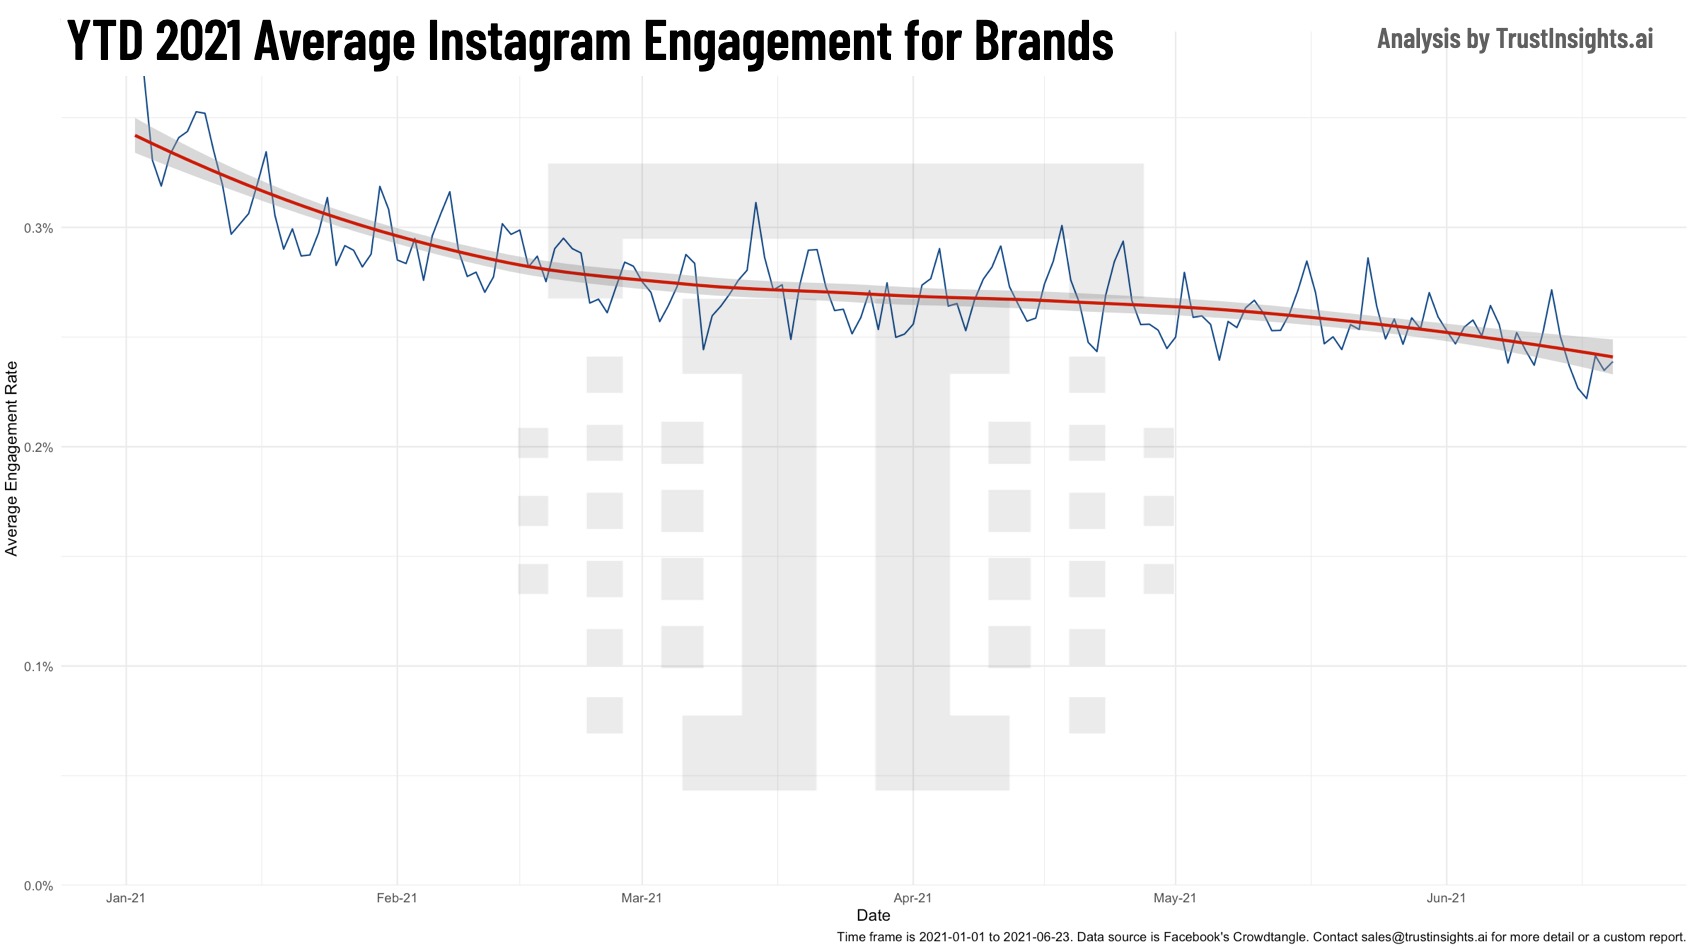 Instagram brand performance of unpaid content